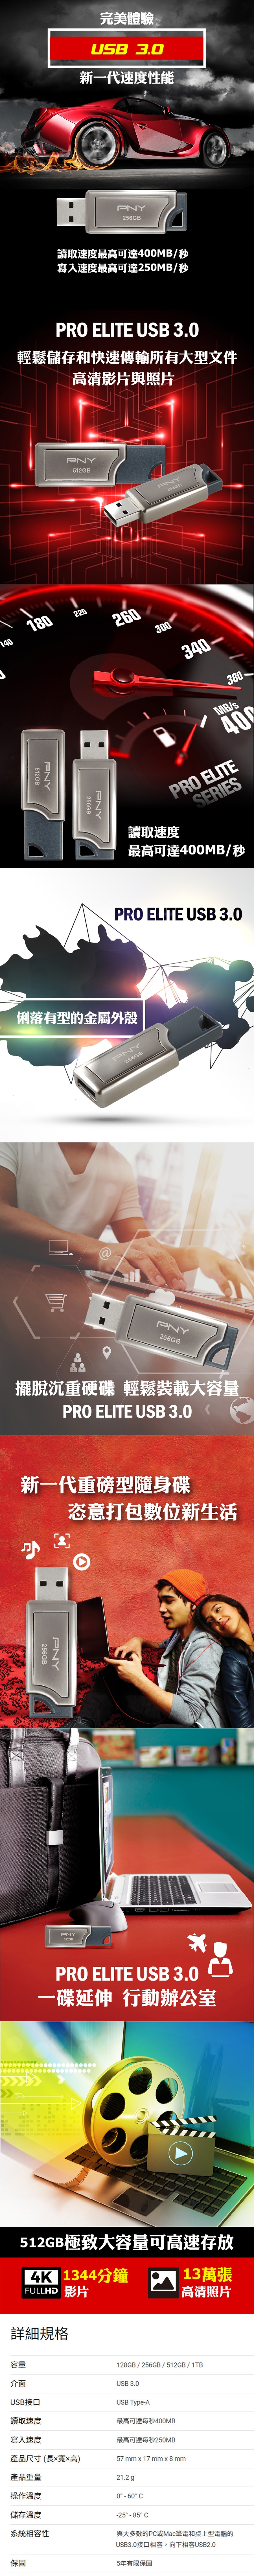 PNY USB3.0 512GB Pro Elite 極速伸縮碟